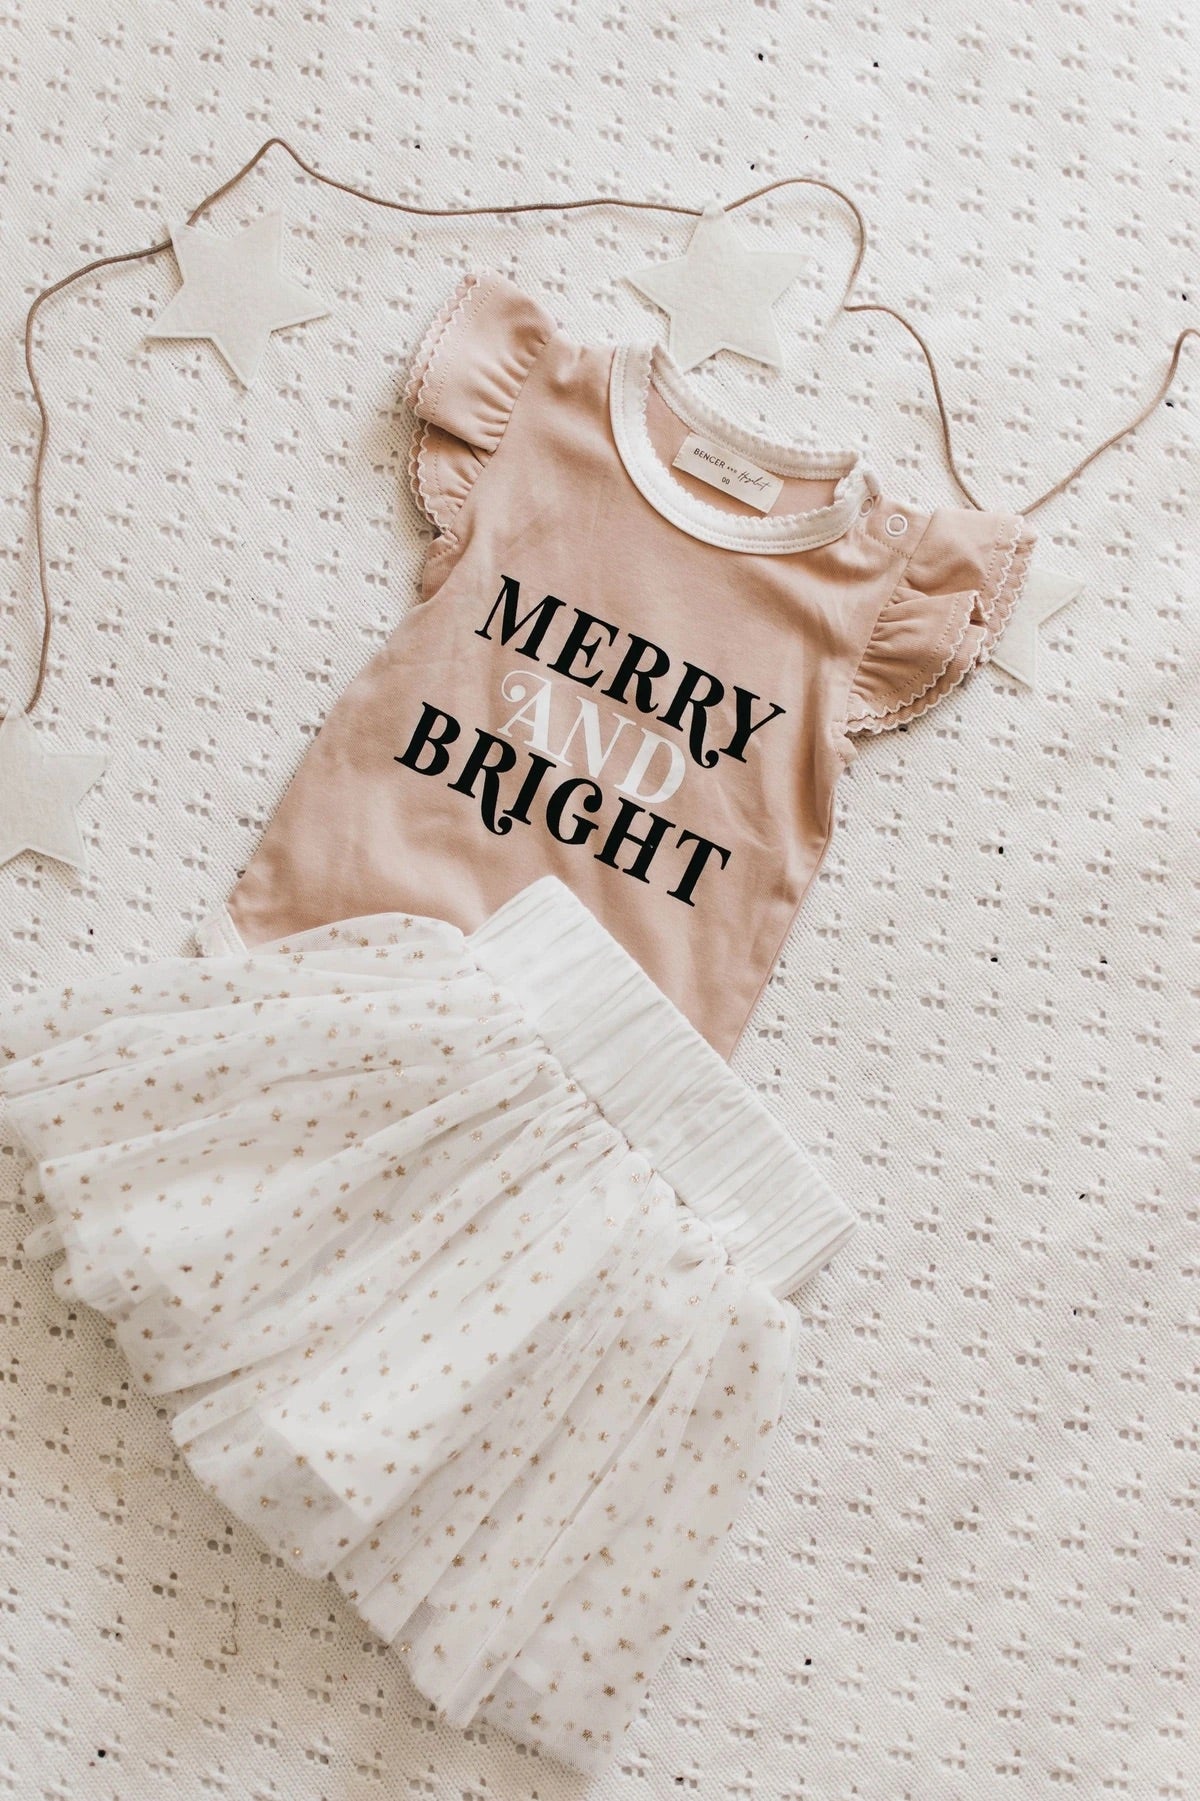 Merry and Bright Bodysuit/Tee